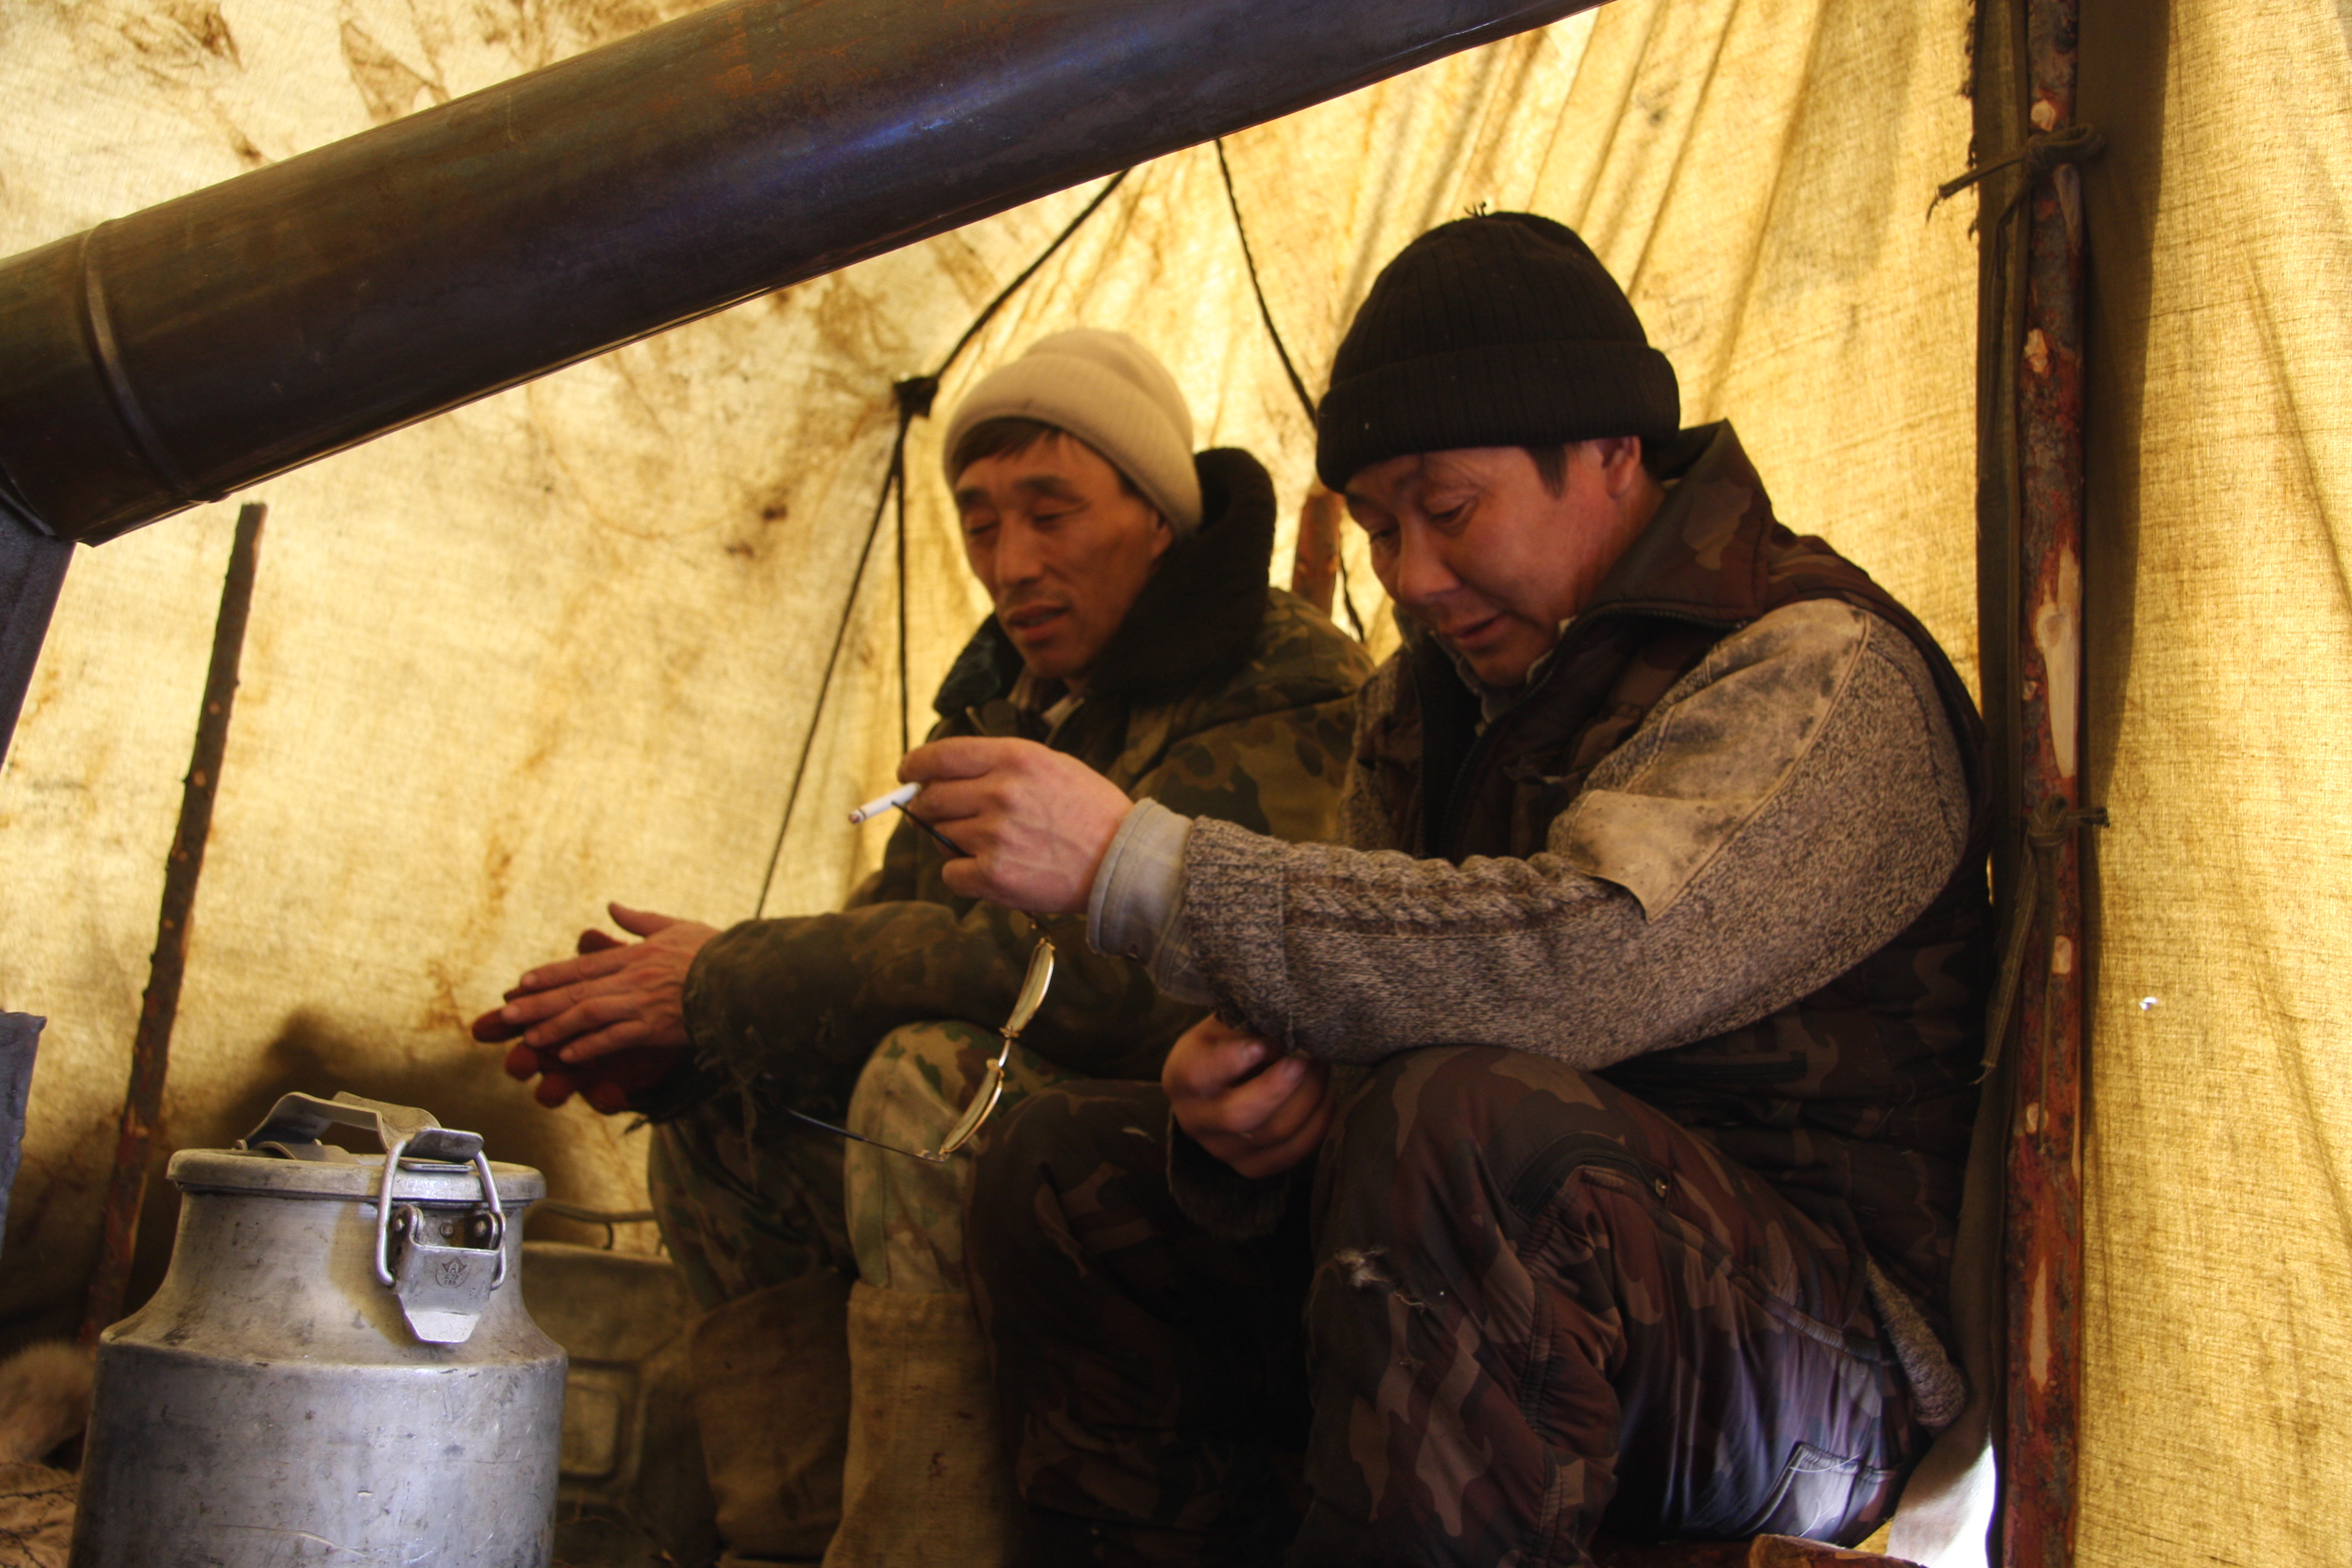 On the left, Vladimir Kolesov, a reindeer herder and oral historian, rests inside the Reindeer Brigade 4 camp in Siberia, Russia